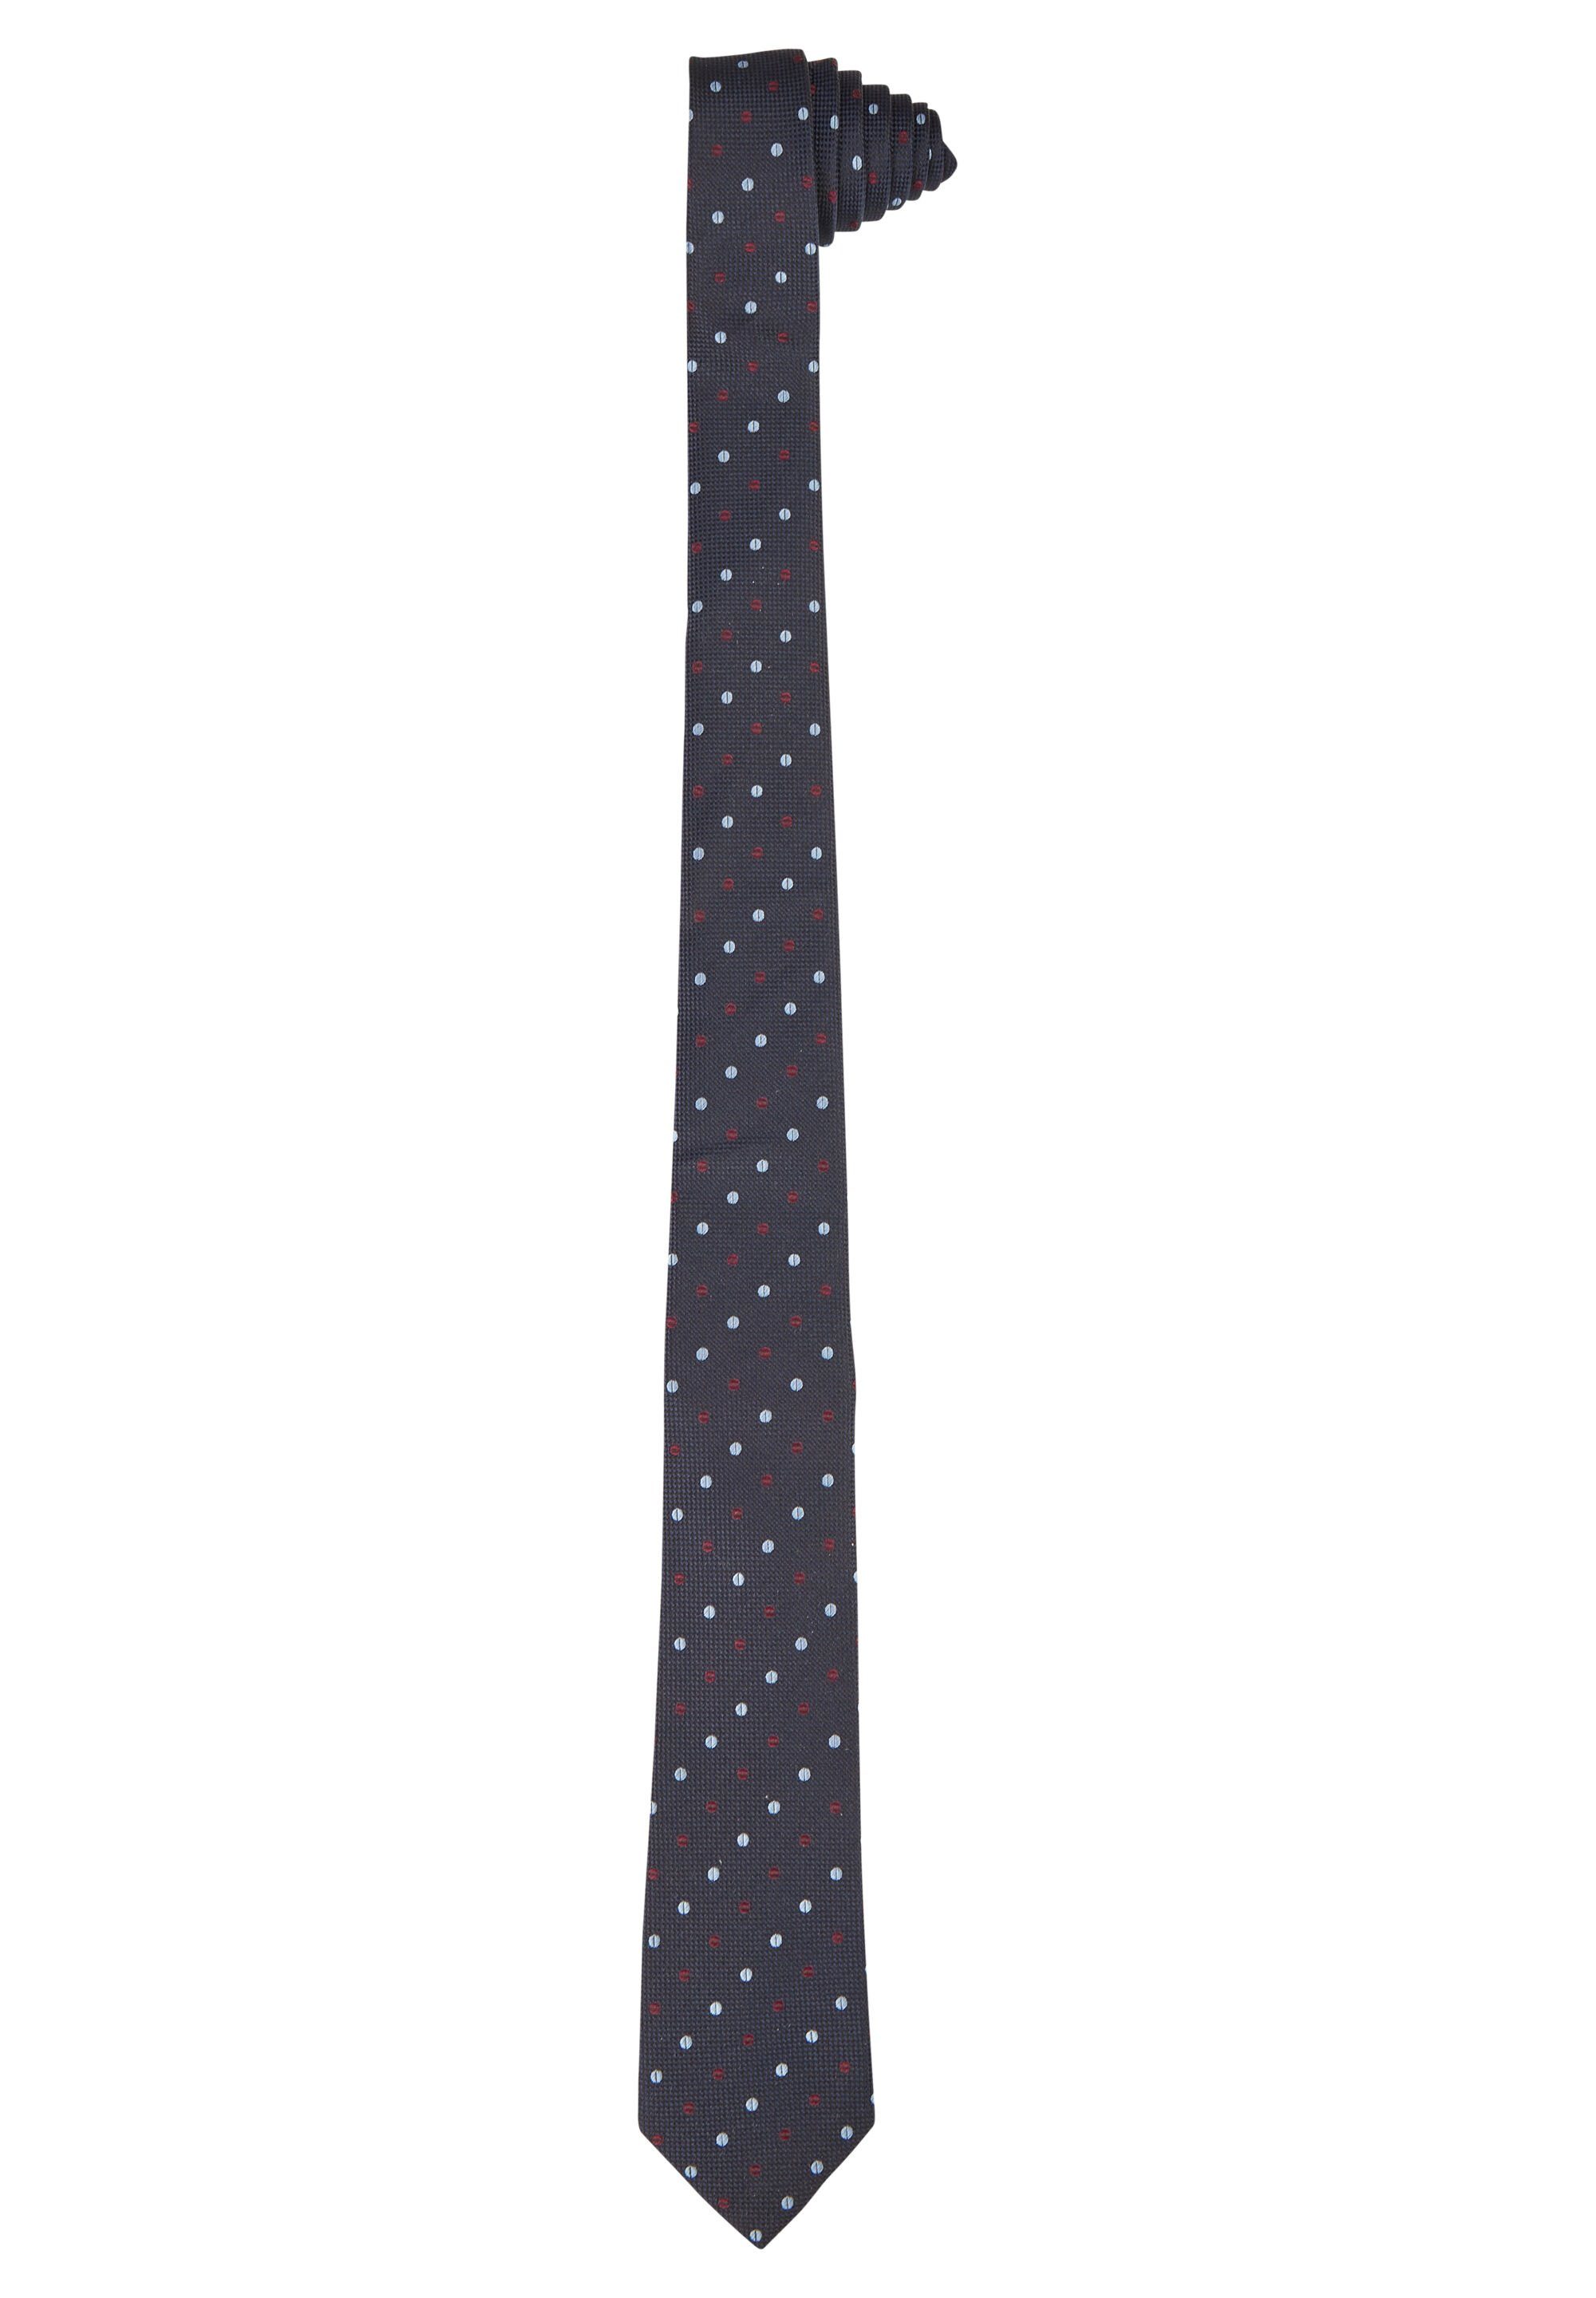 HECHTER PARIS Krawatte mit modernem Muster navy